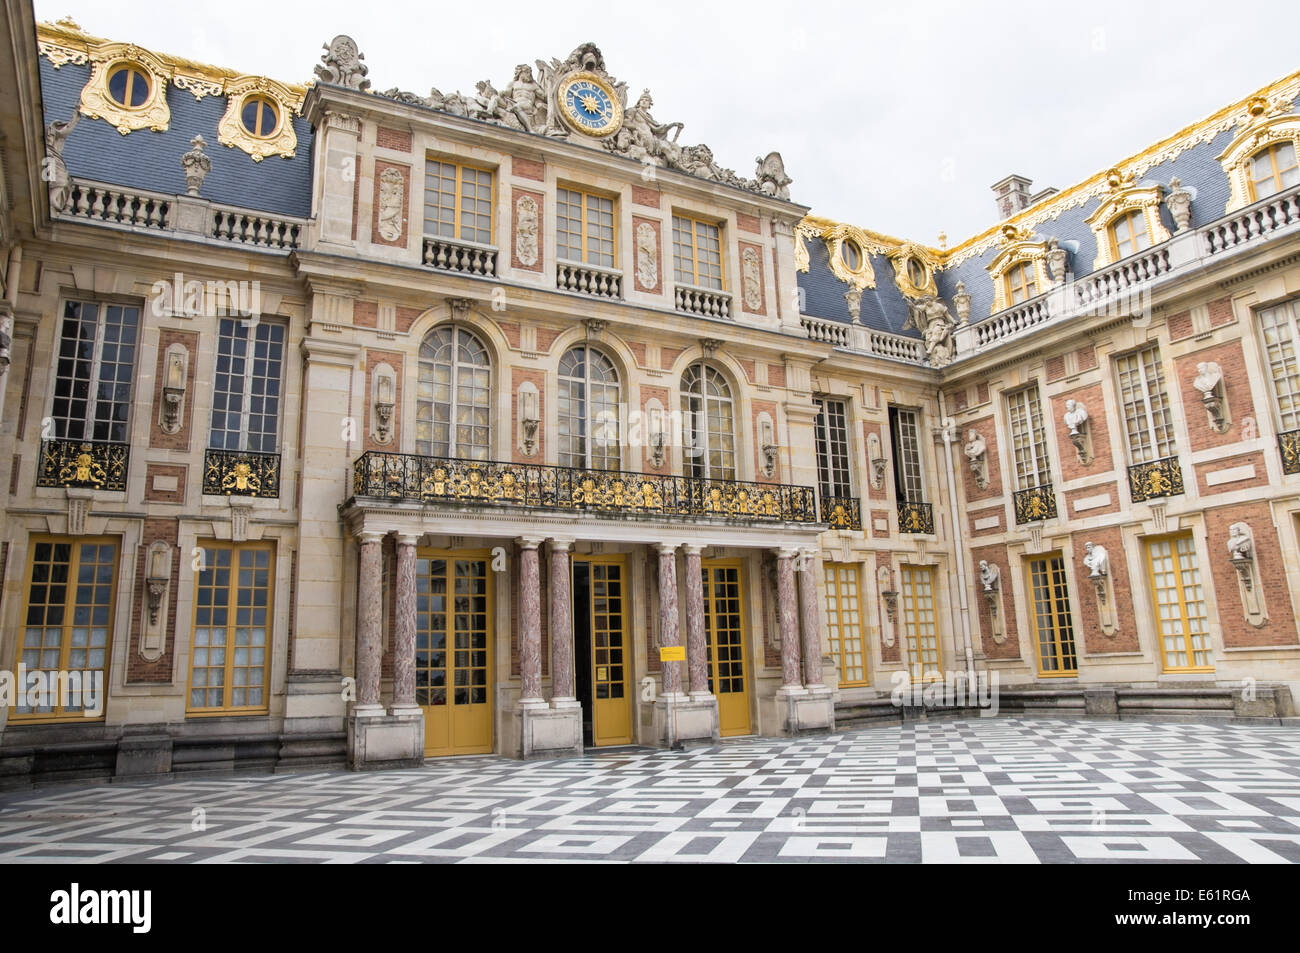 Façade baroque du château de Versailles Château de Versailles [ ] en France Banque D'Images